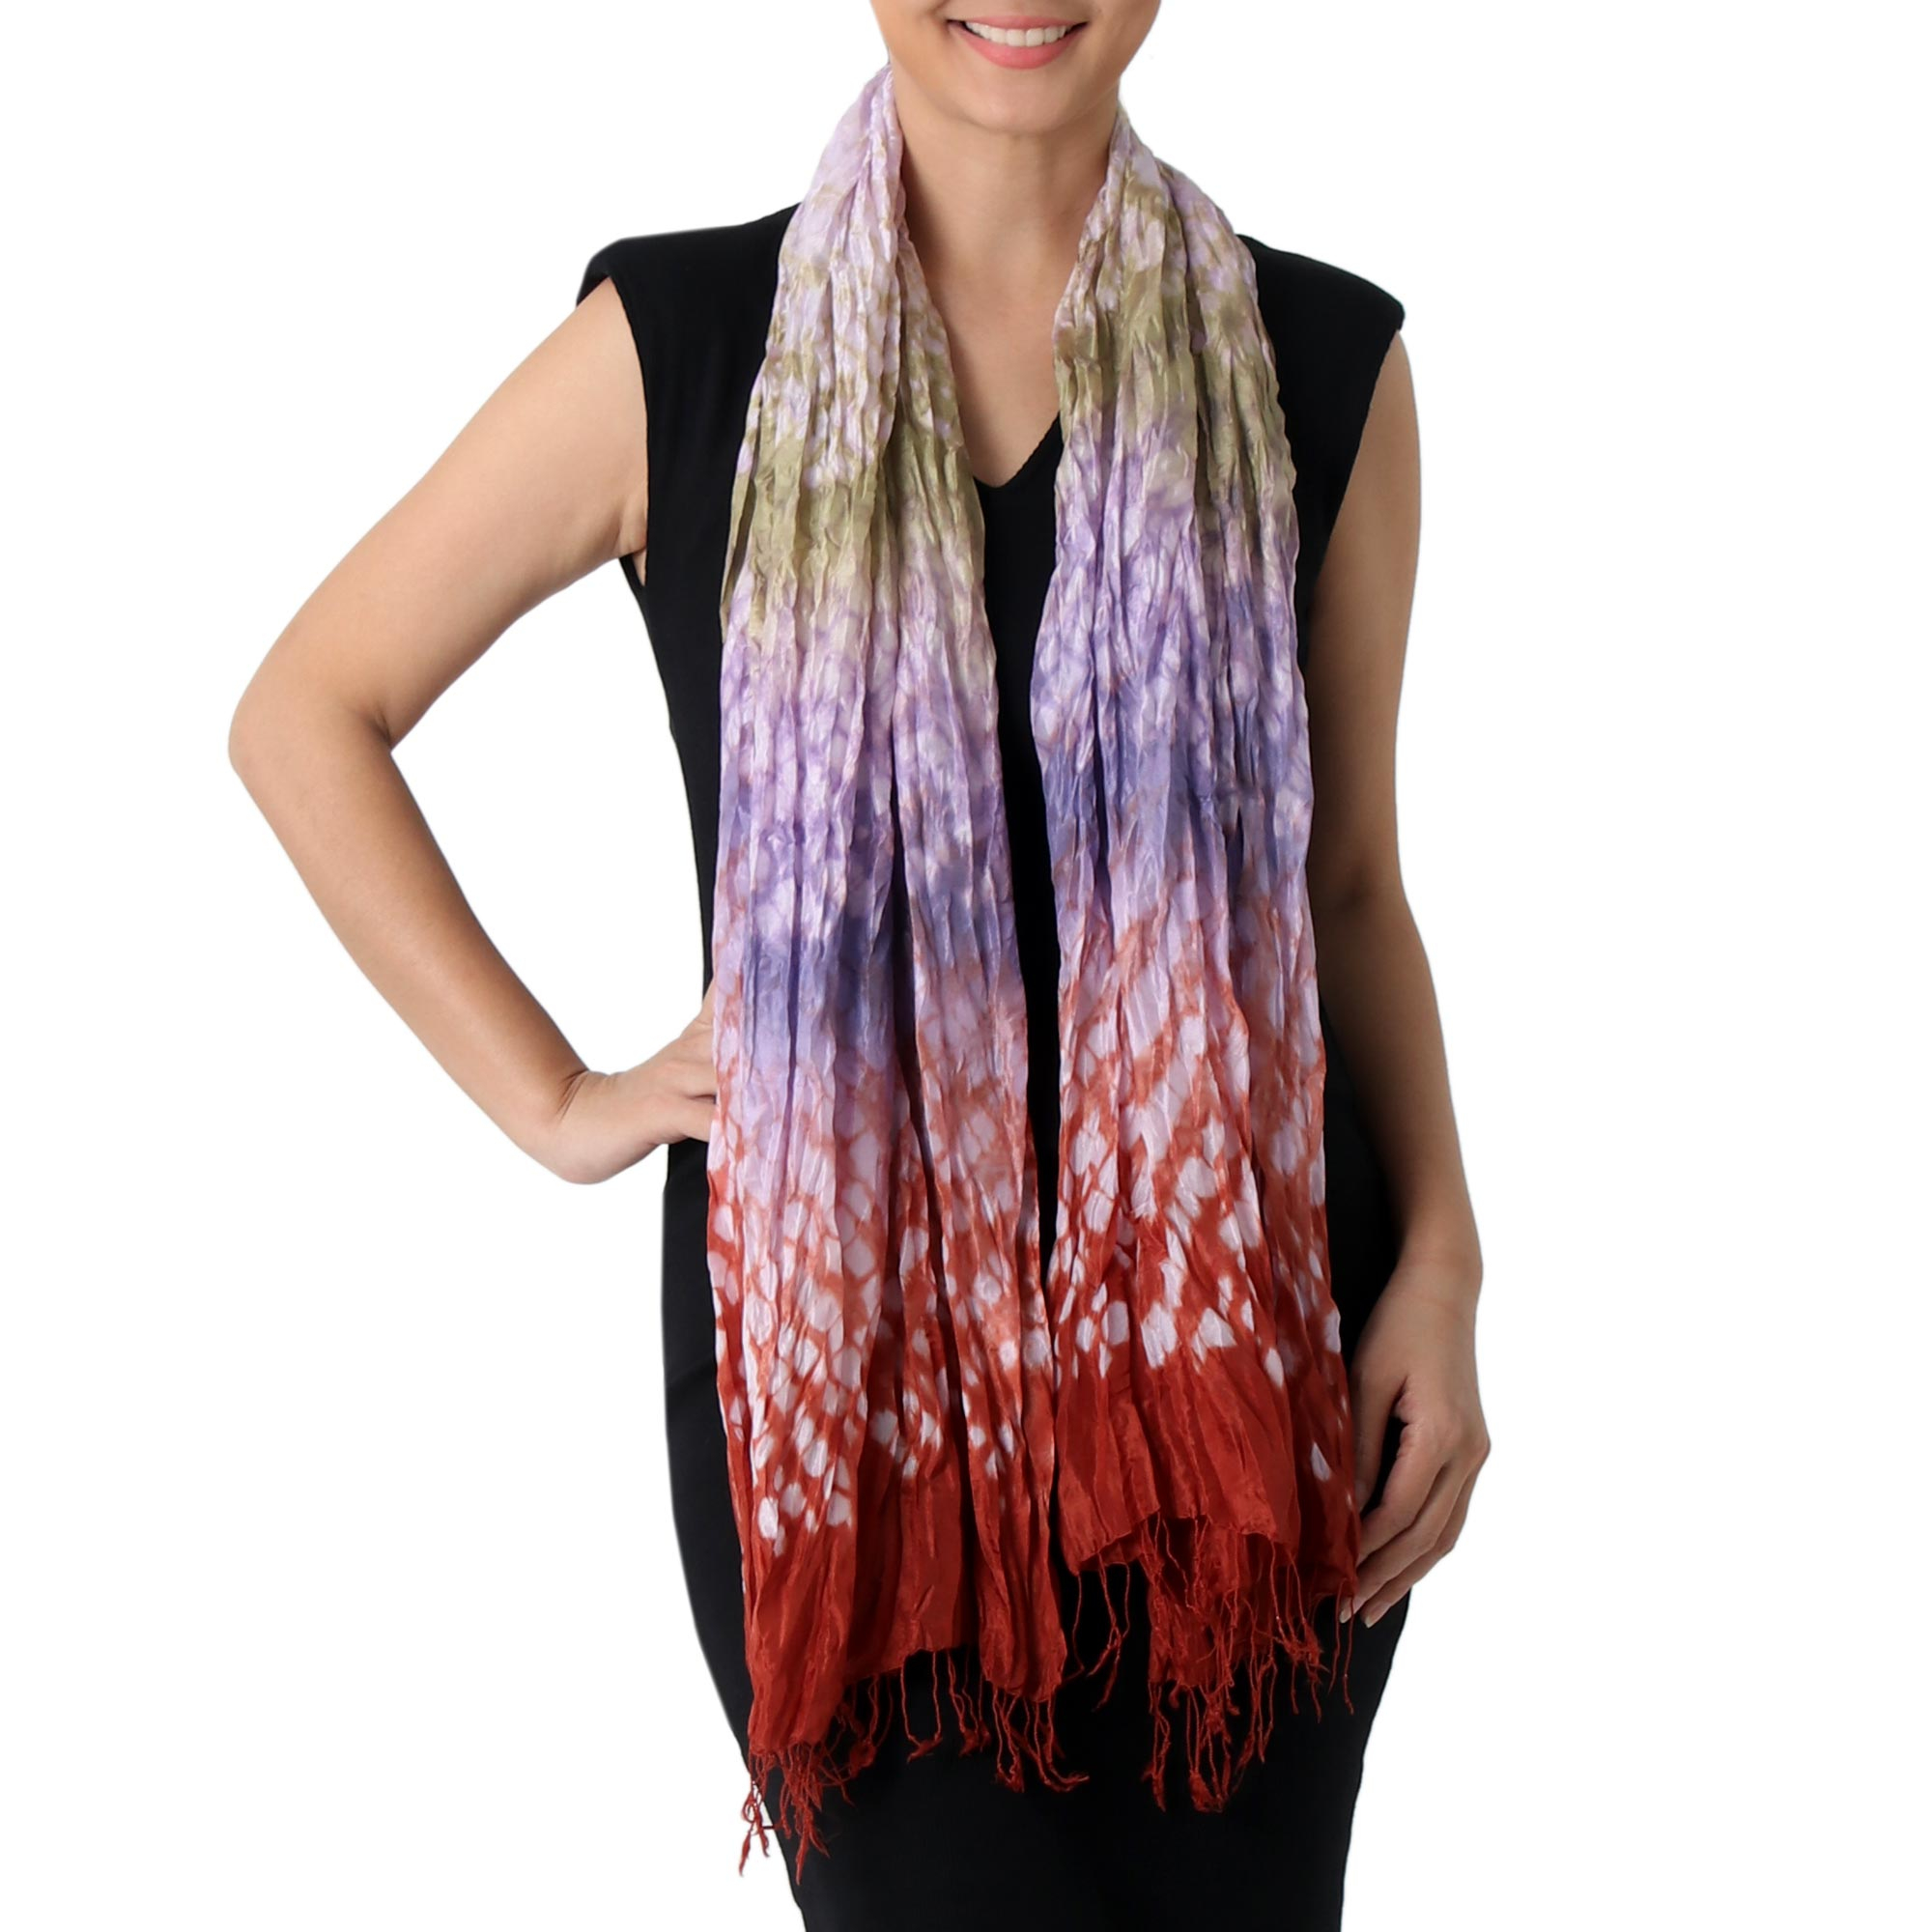 Fair Trade Colourful Light Silky Tie-Dye Batik Beaded Long Scarf Wrap Shawl